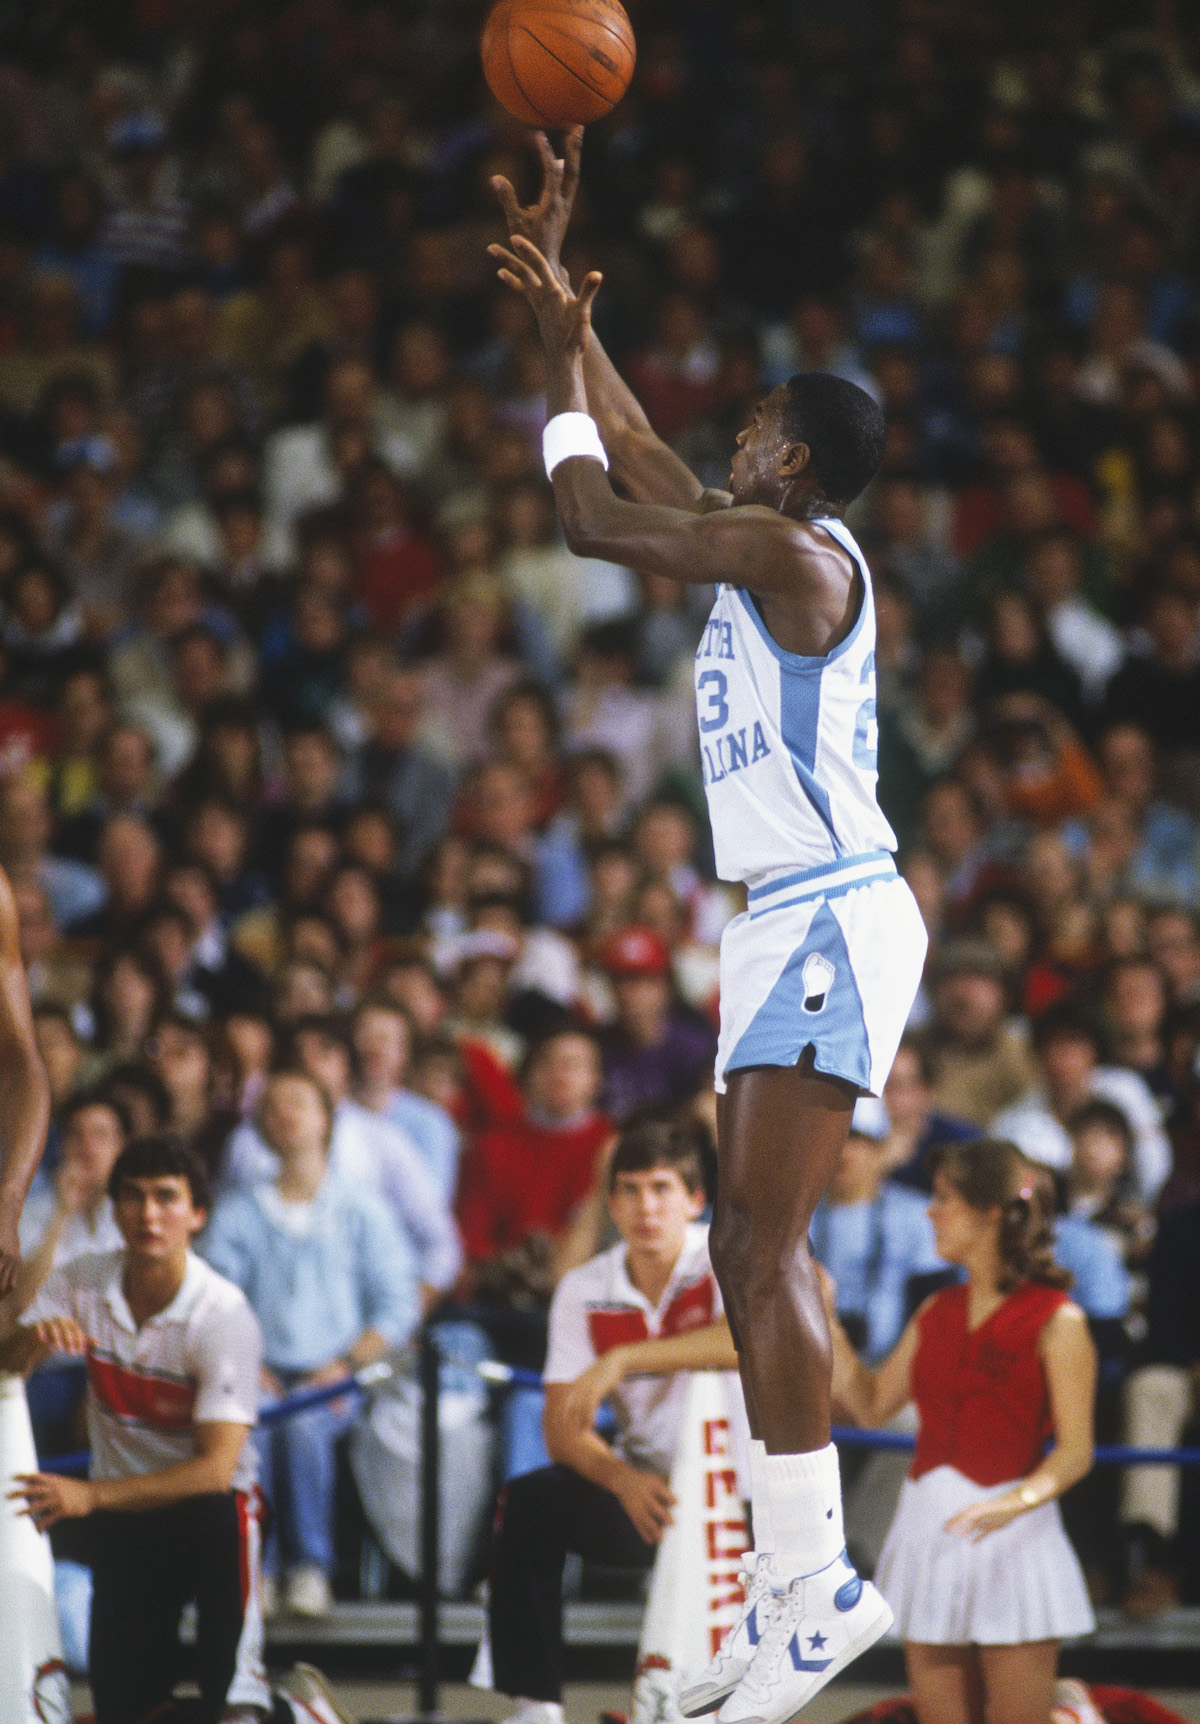 University of North Carolina's Michael Jordan makes a jump shot during his college career